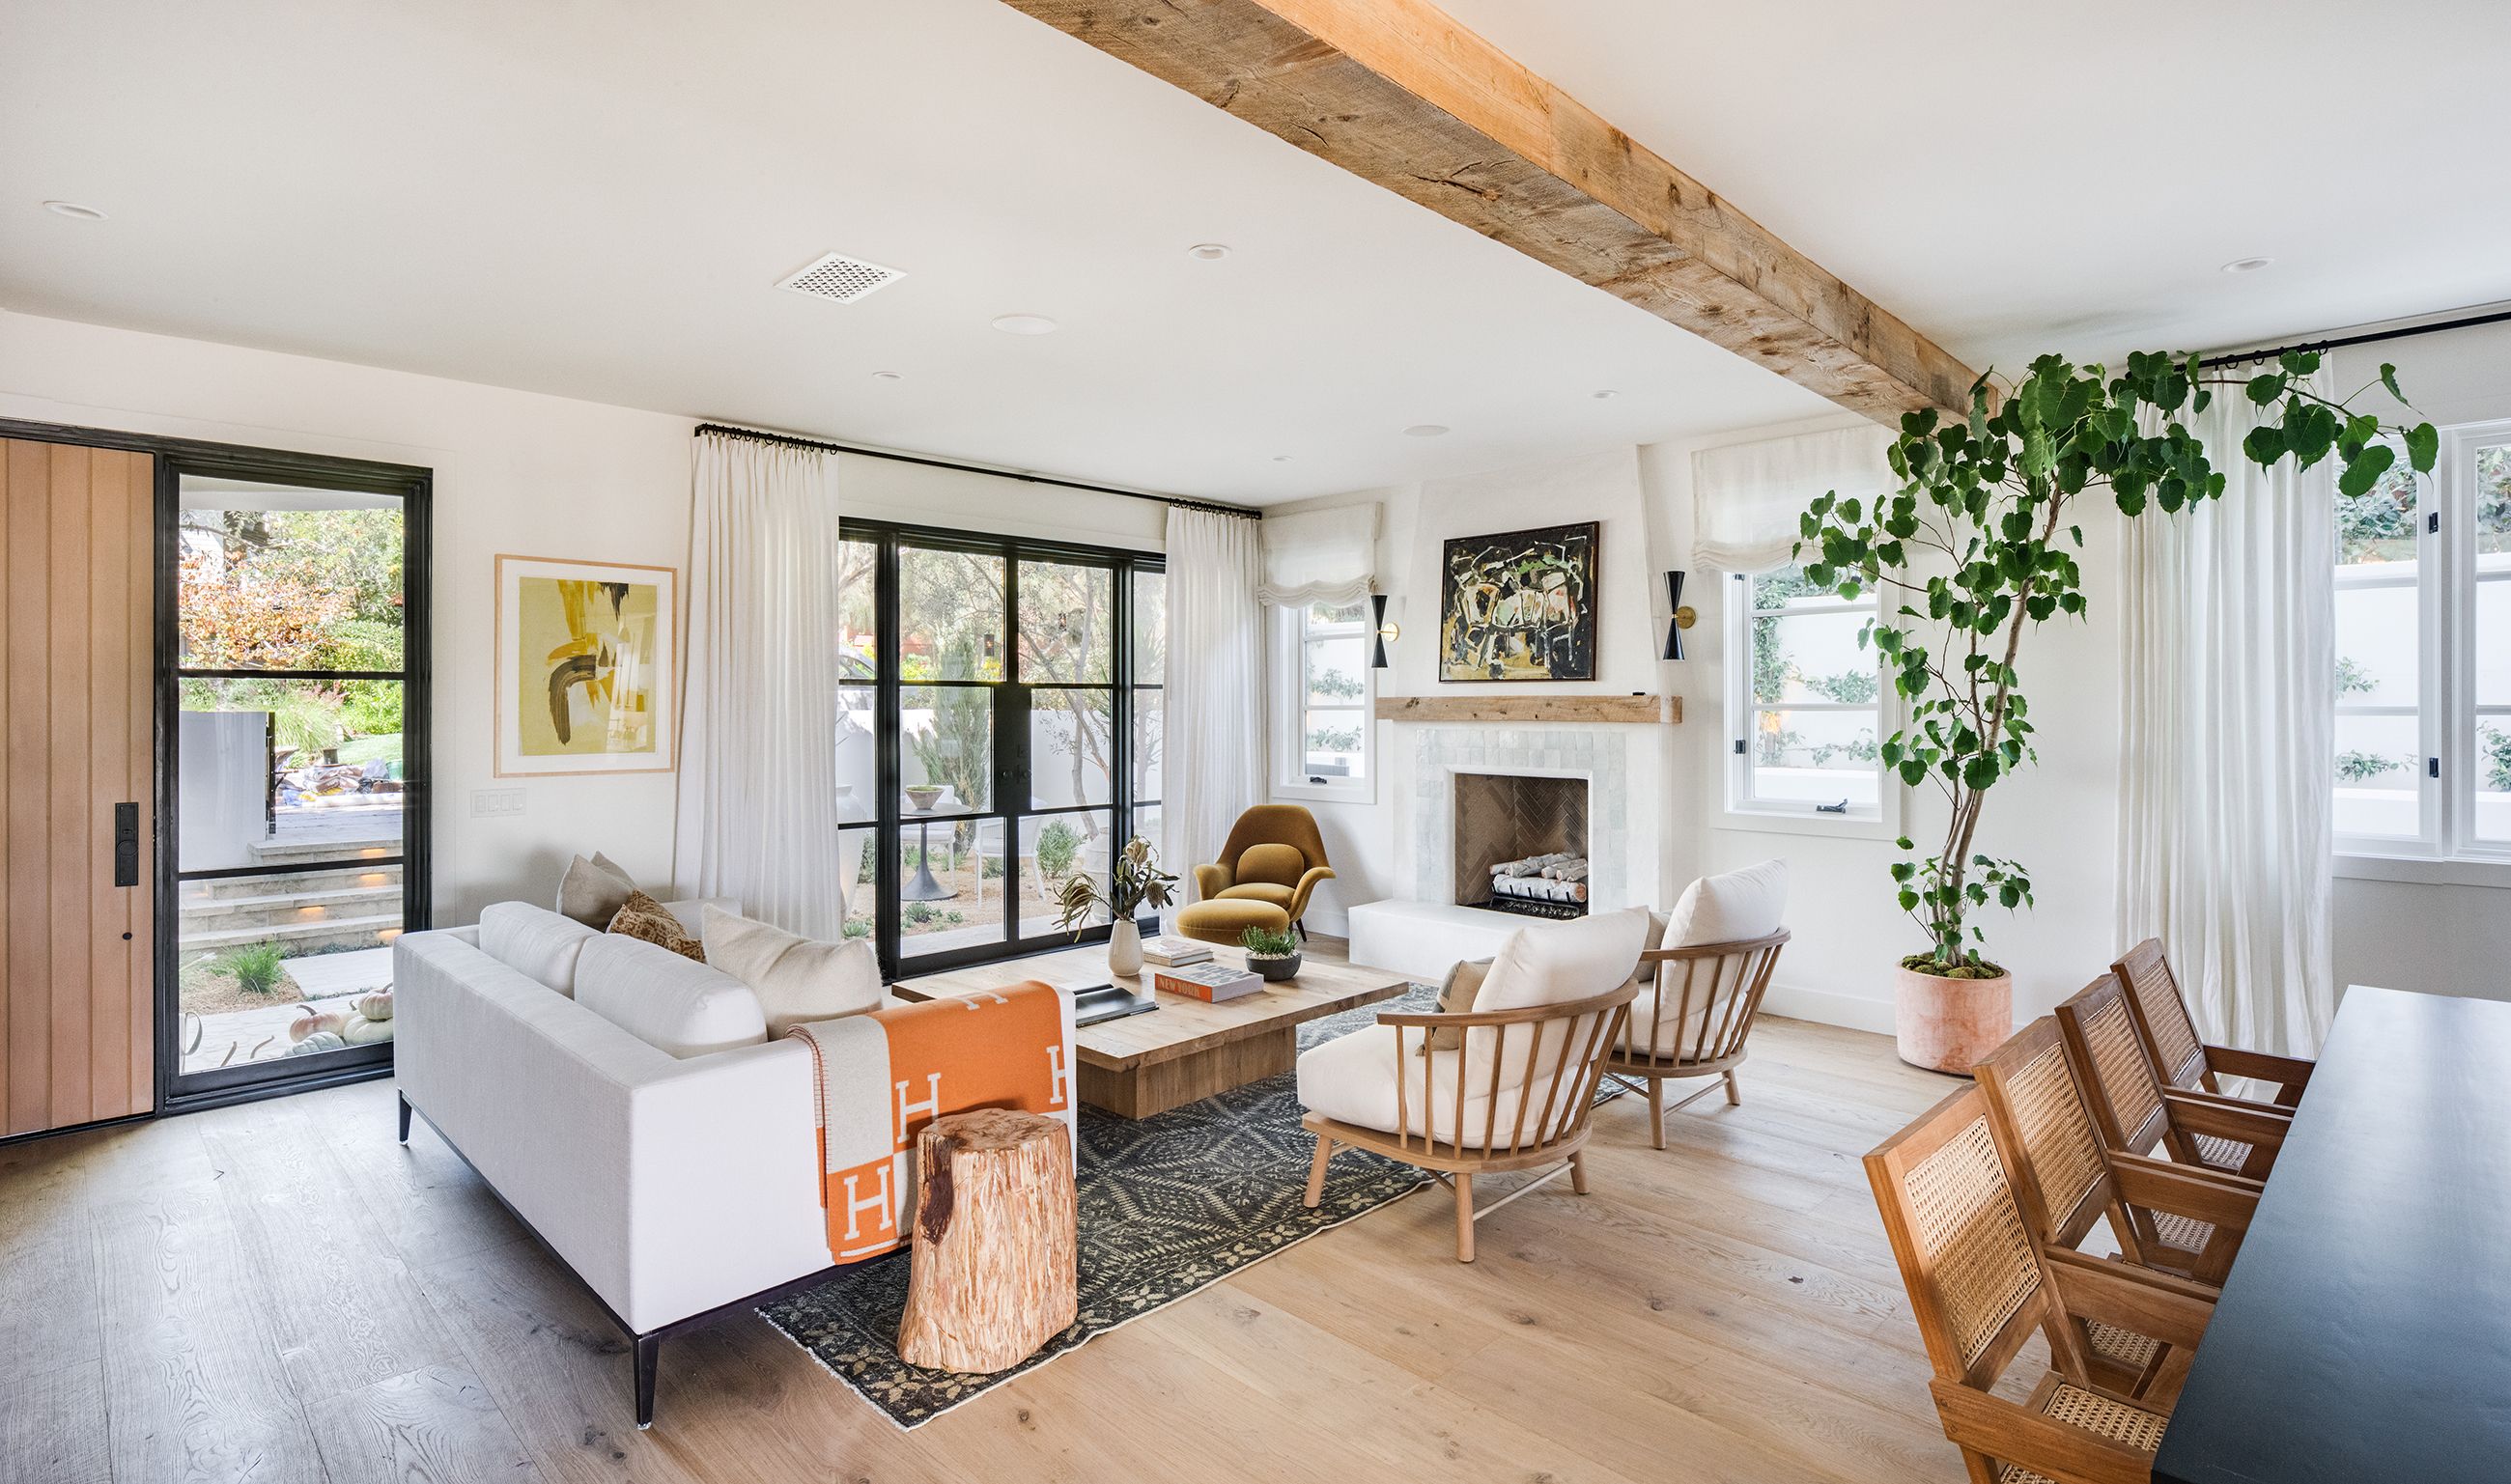 70 Stunning Living Room Ideas Chic, Stylish Living Rooms